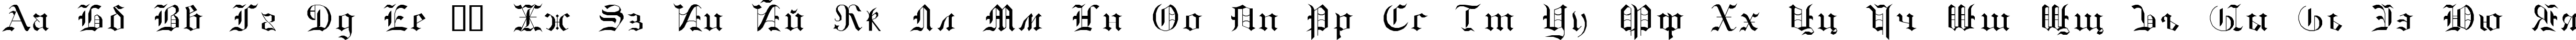 Пример написания русского алфавита шрифтом GothicE